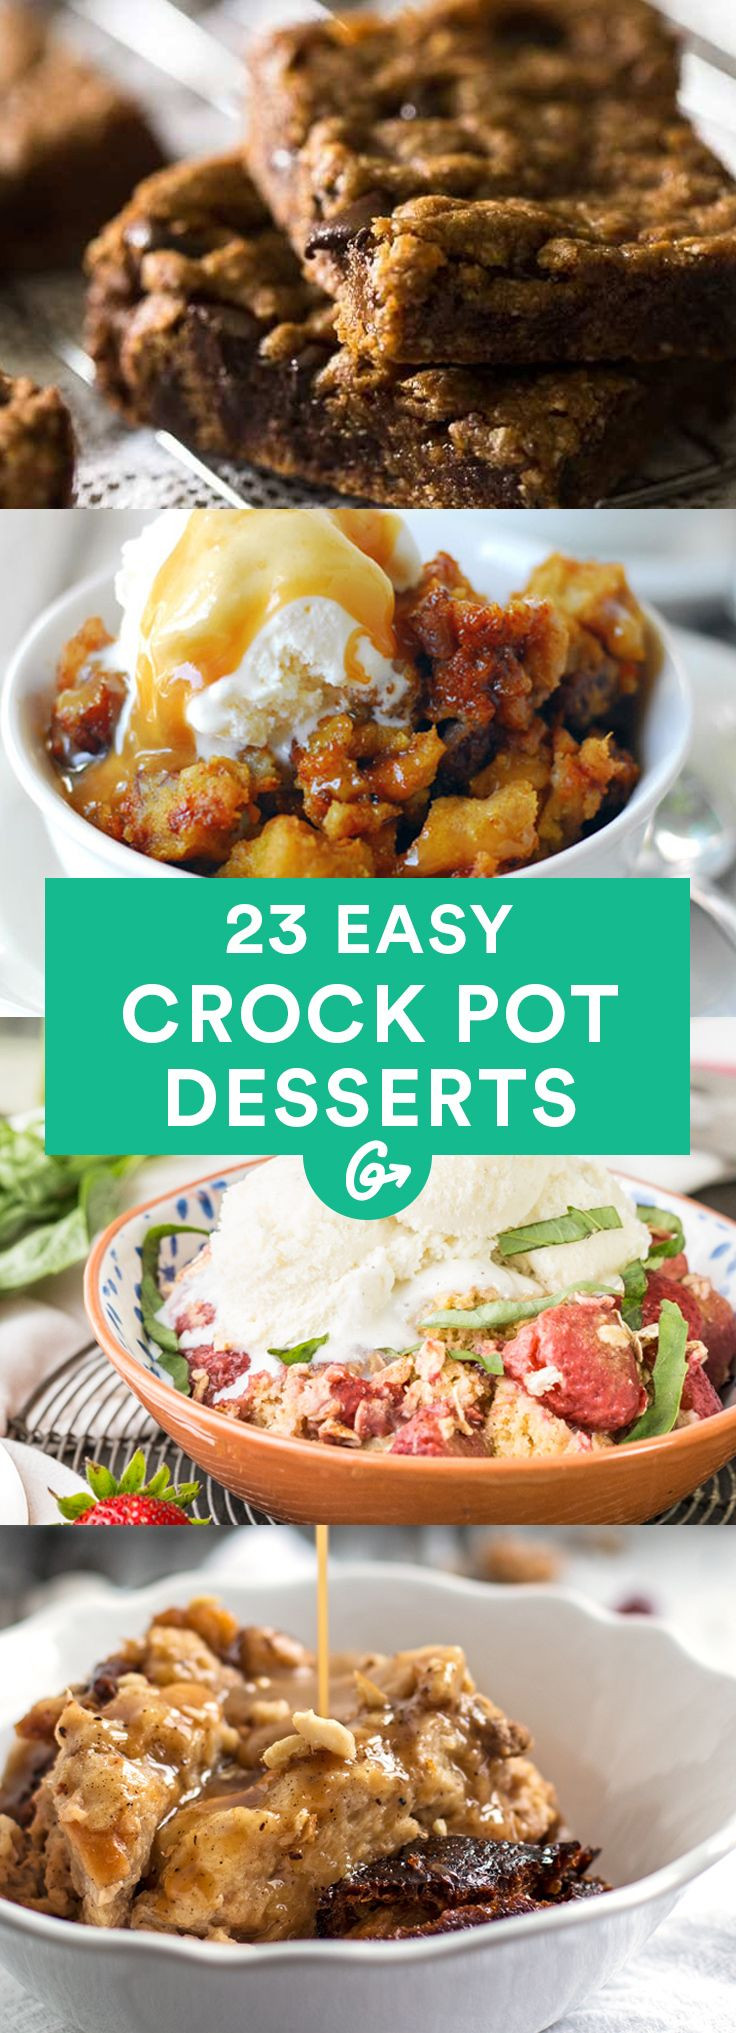 Healthy Crockpot Desserts
 1000 images about crockpot breads & desserts on Pinterest